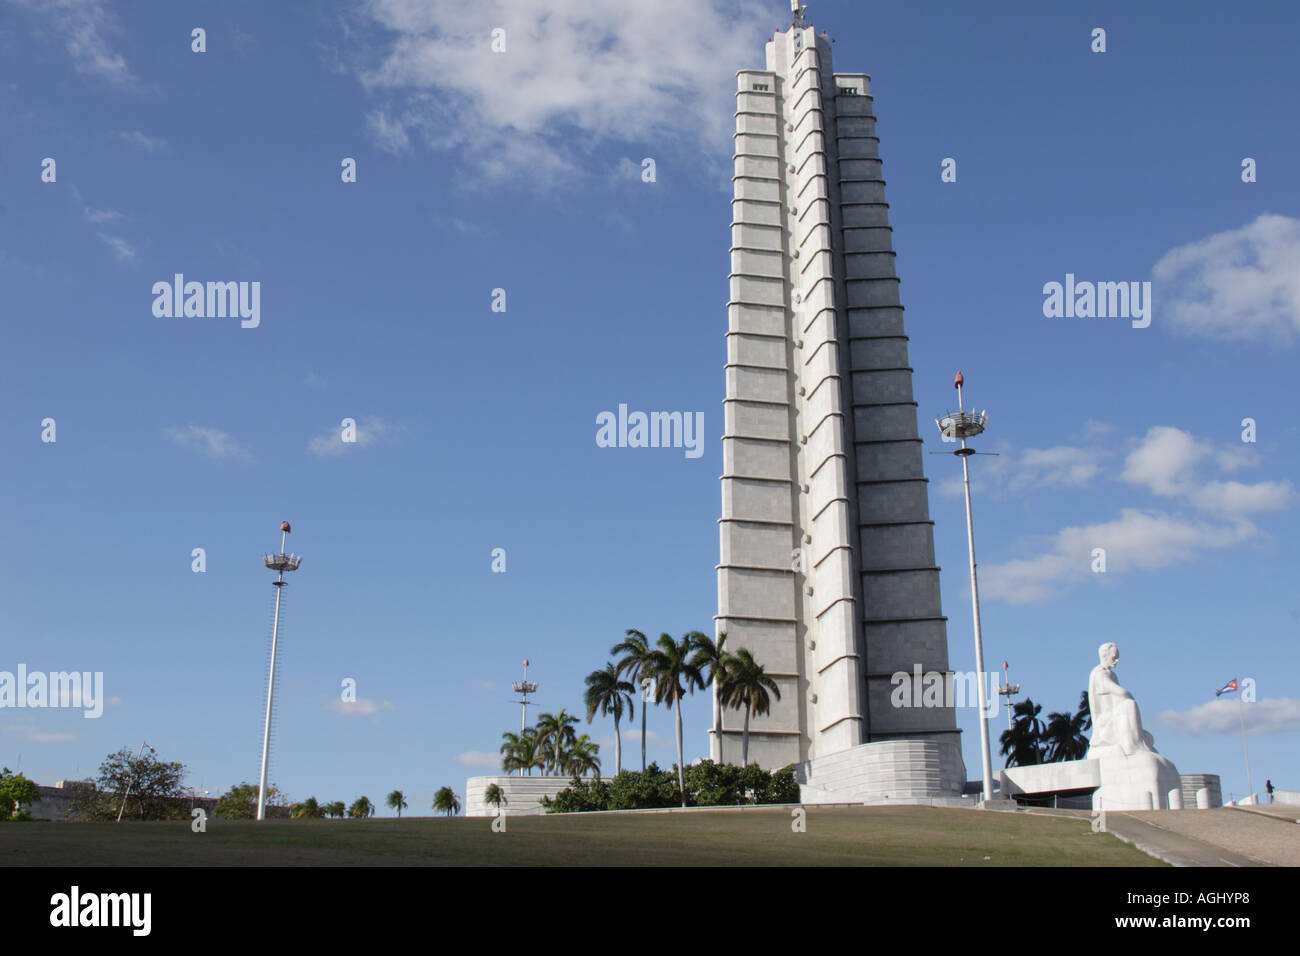 Memorial Tower and Statue of Jose Marti at Plaza de la Revolution, Havana, Cuba Stock Photo